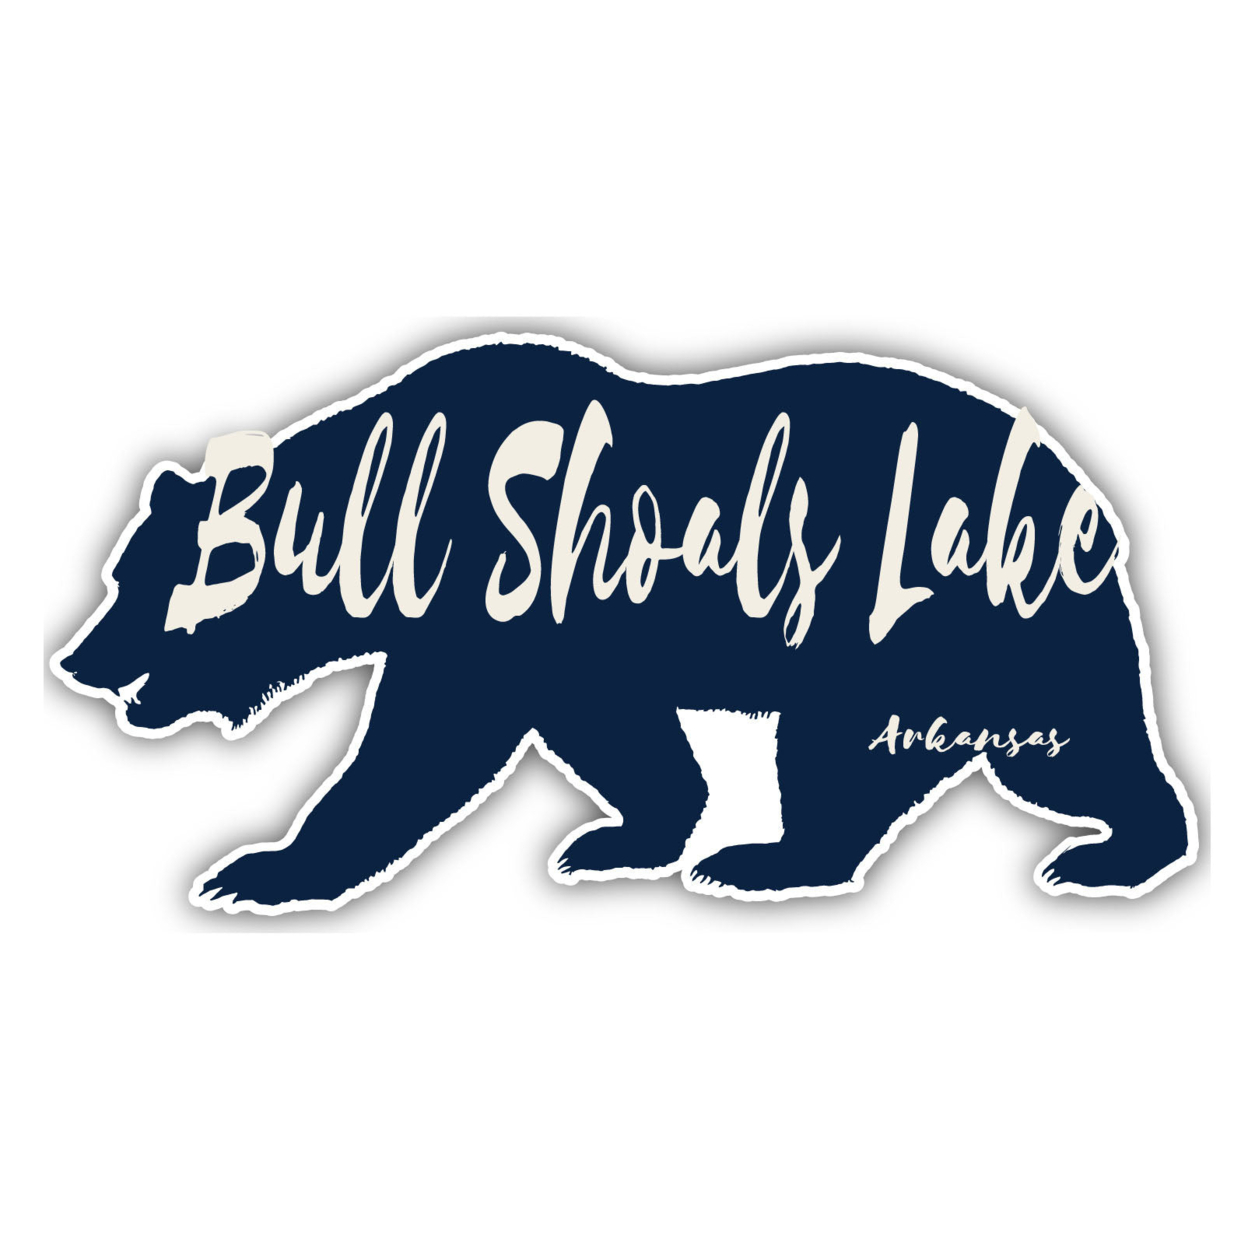 Bull Shoals Lake Arkansas Souvenir Decorative Stickers (Choose Theme And Size) - Single Unit, 2-Inch, Adventures Awaits